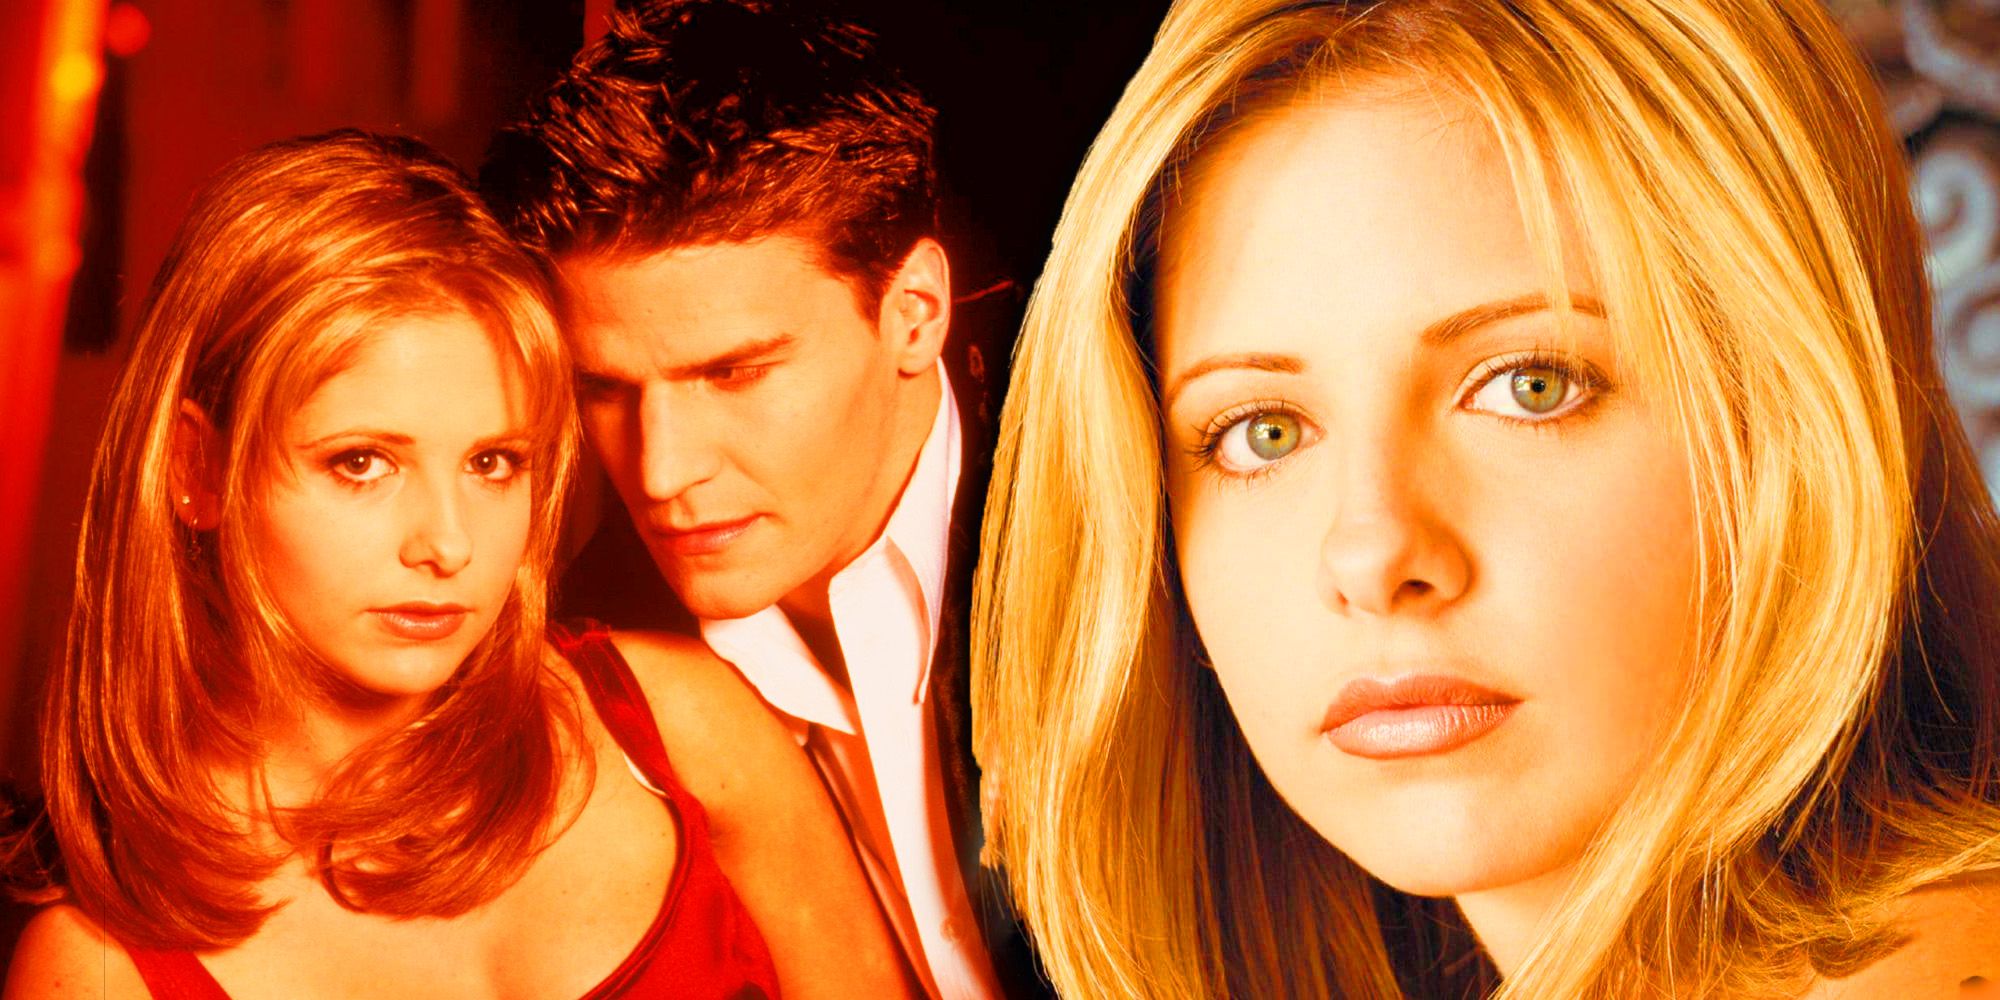 Sarah Michelle Gellar as Buffy and David Boreanaz as Angel in Buffy the Vampire Slayer.